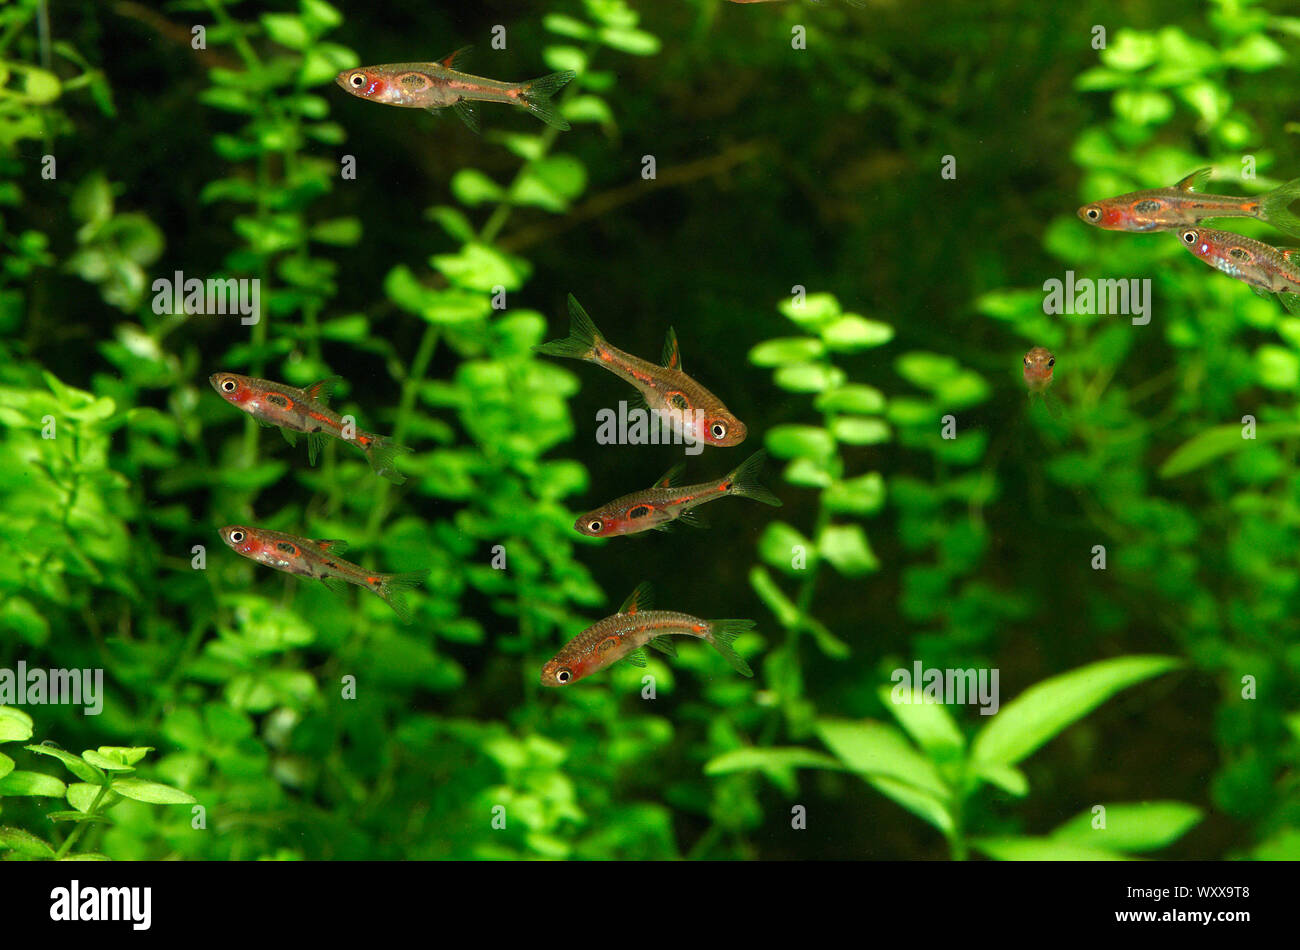 Rasbora merah (Boraras merah) group in aquarium Stock Photo